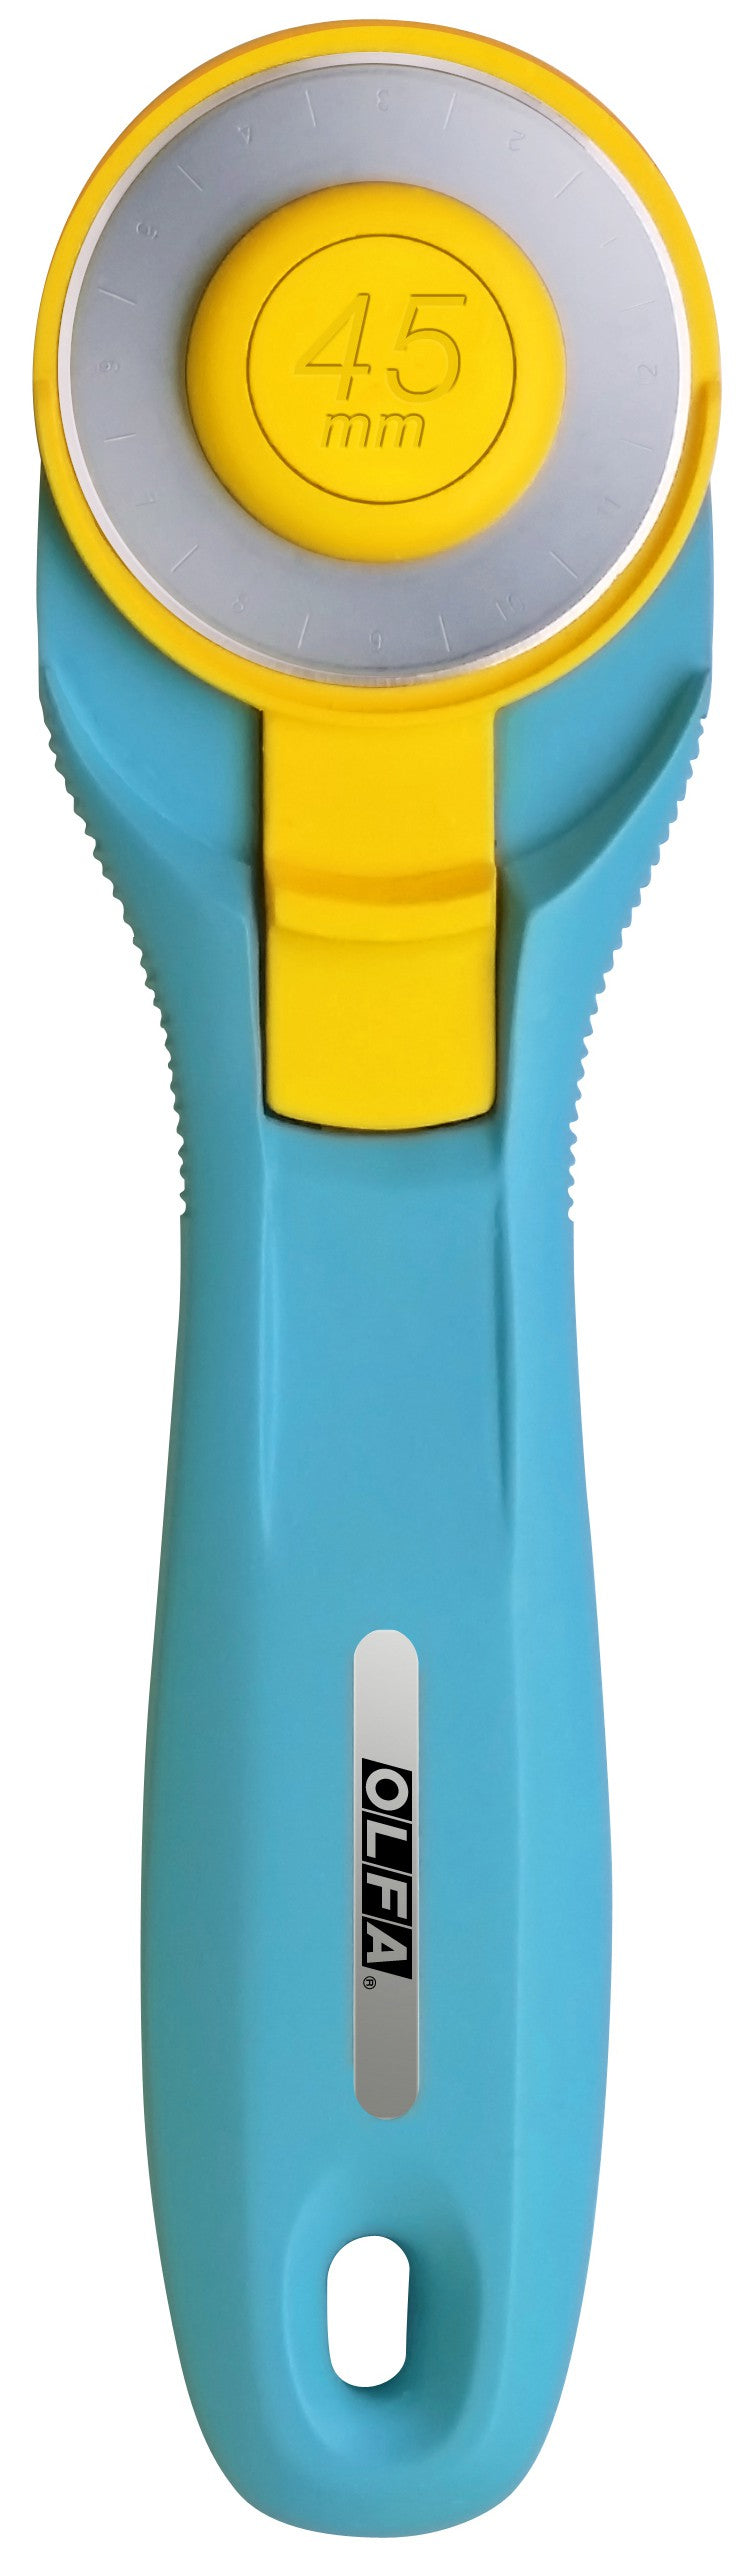 45mm Olfa Splash Rotary Cutter - Aqua